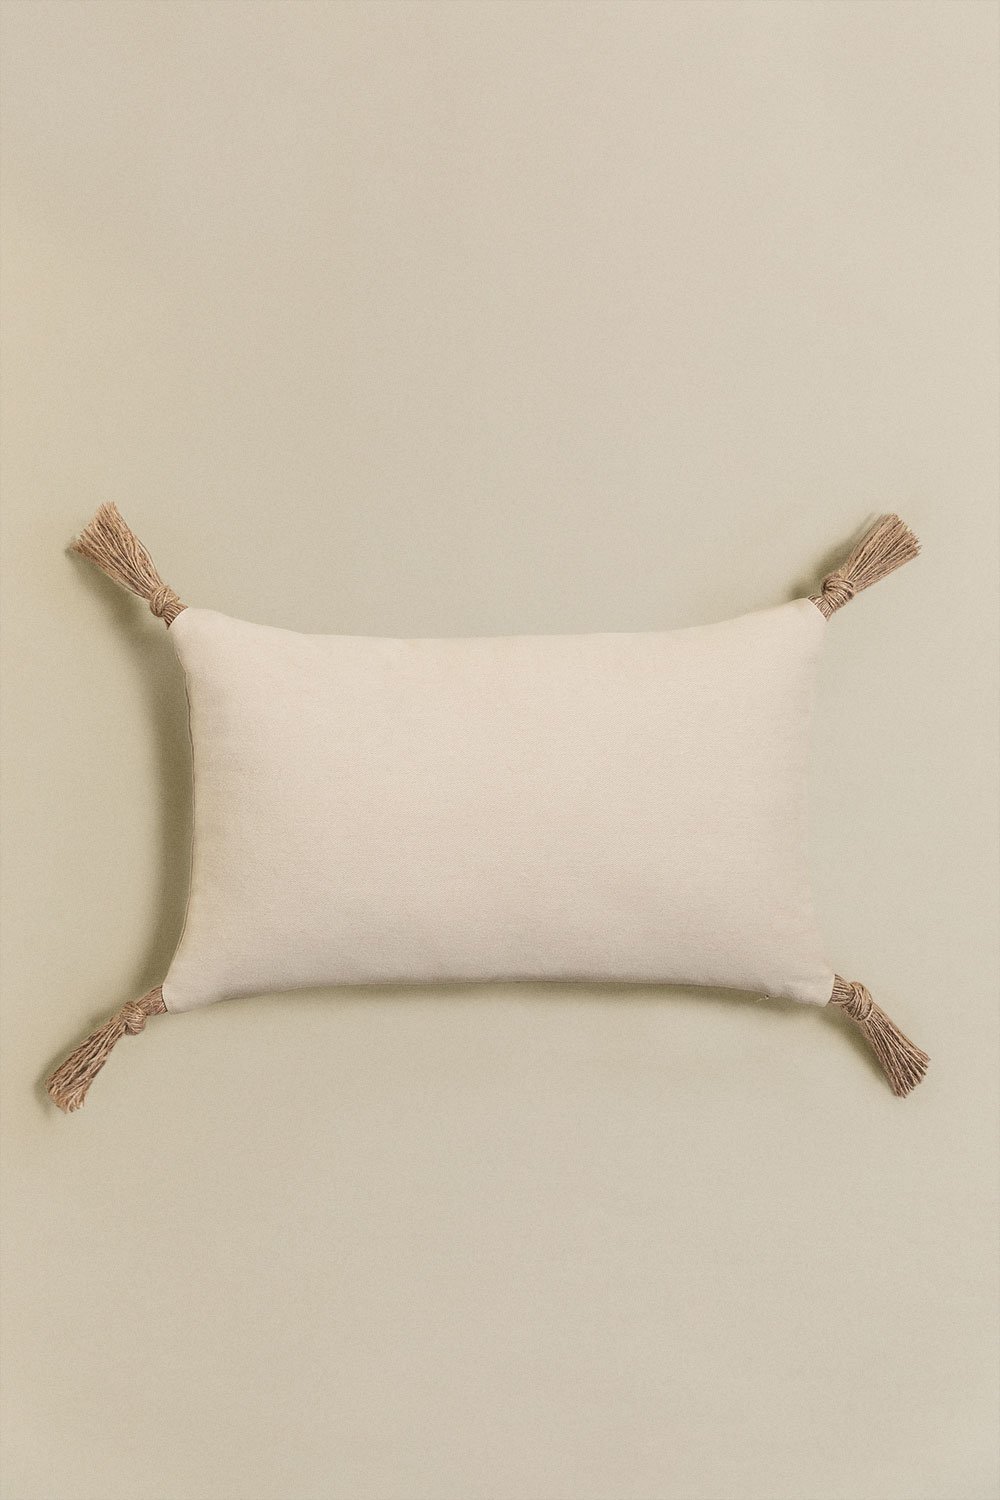 Rectangular Cotton Cushion (30x50 cm) Musk, gallery image 1